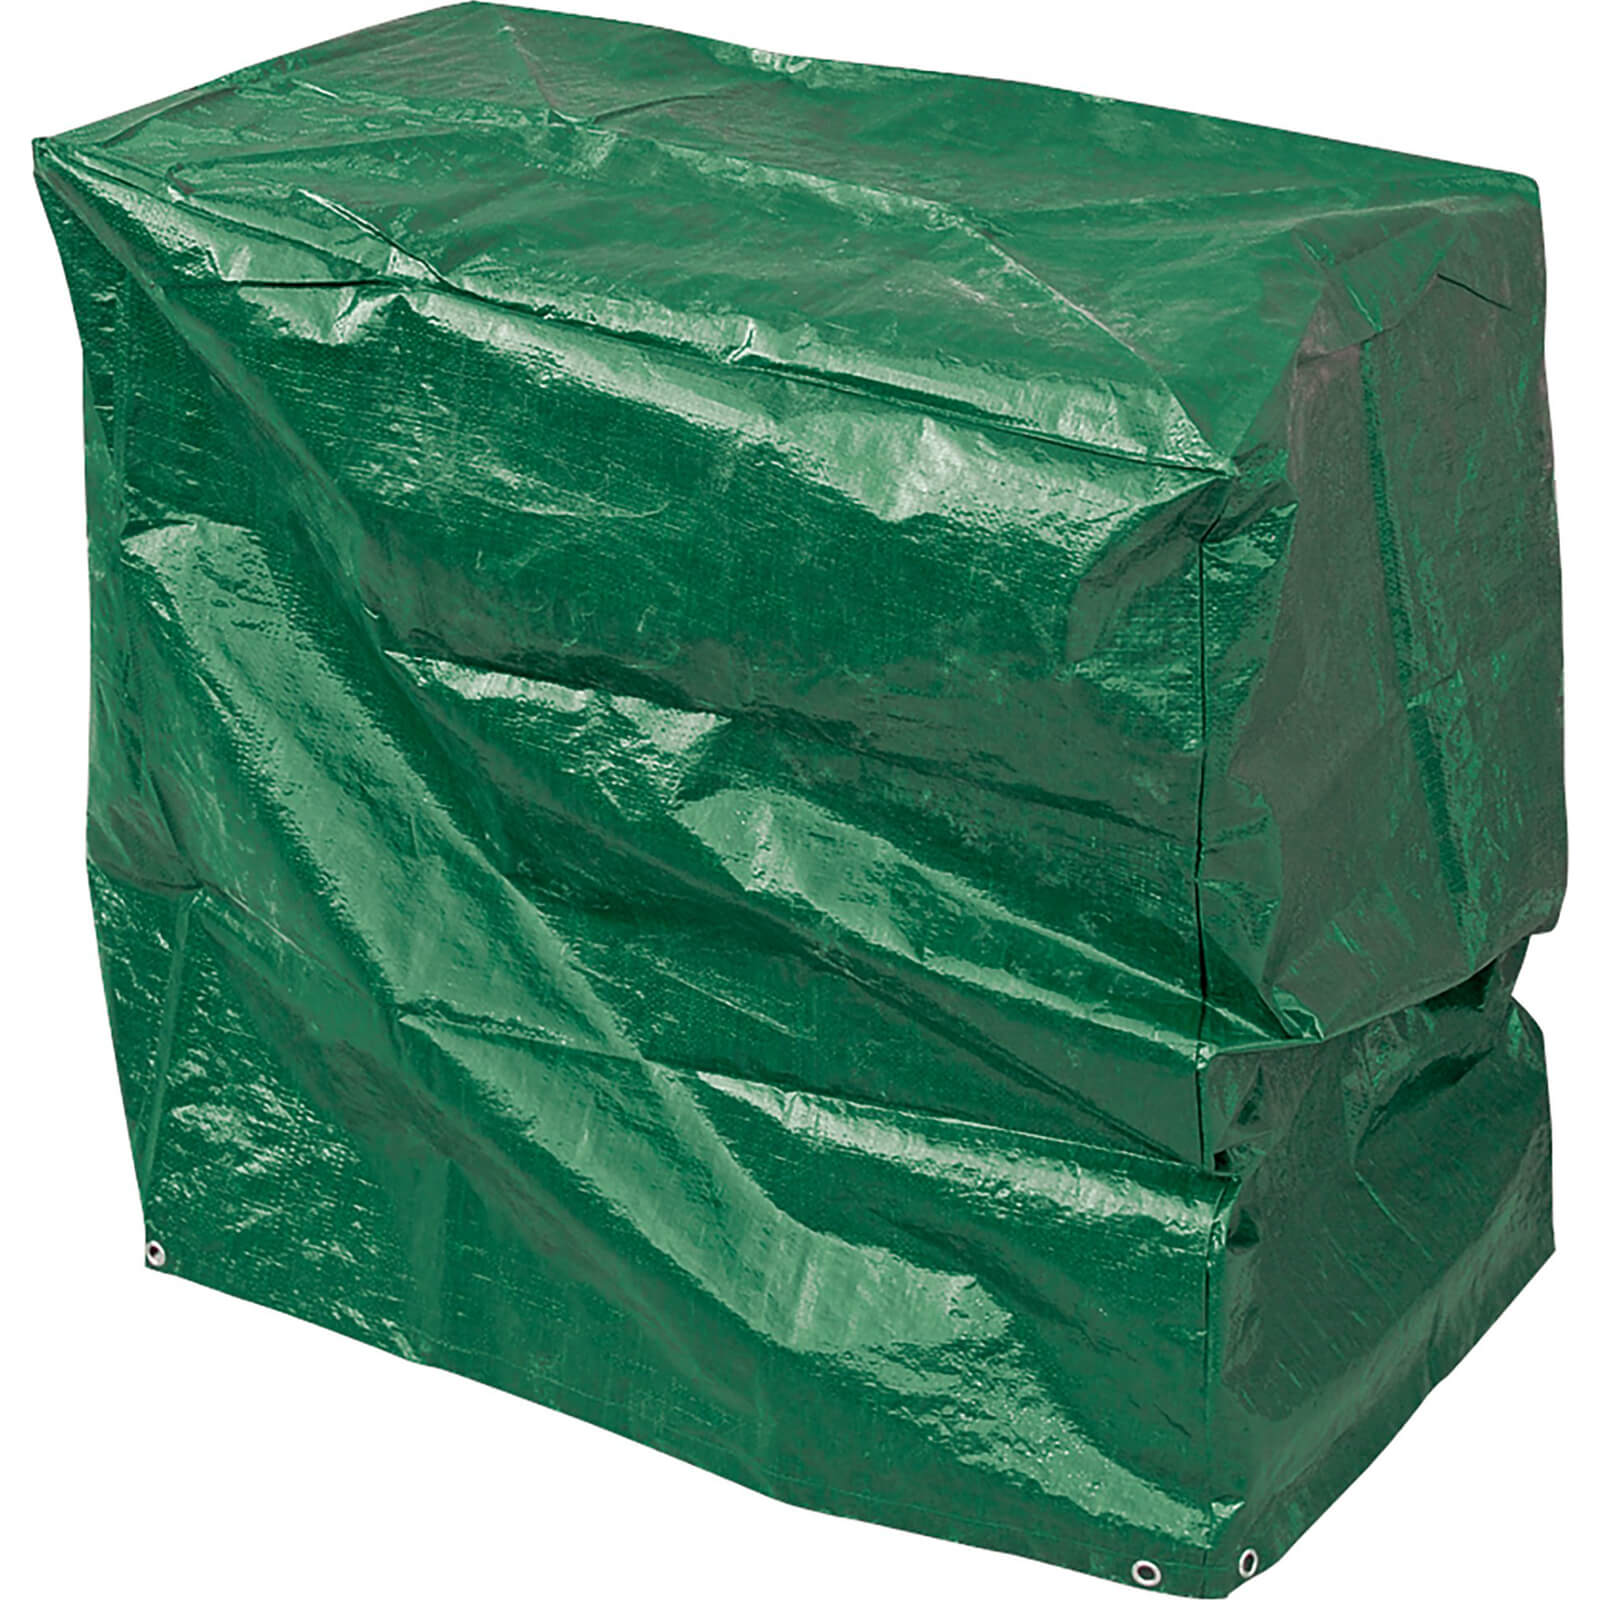 Image of Draper OC2 Polyethylene Barbecue Cover